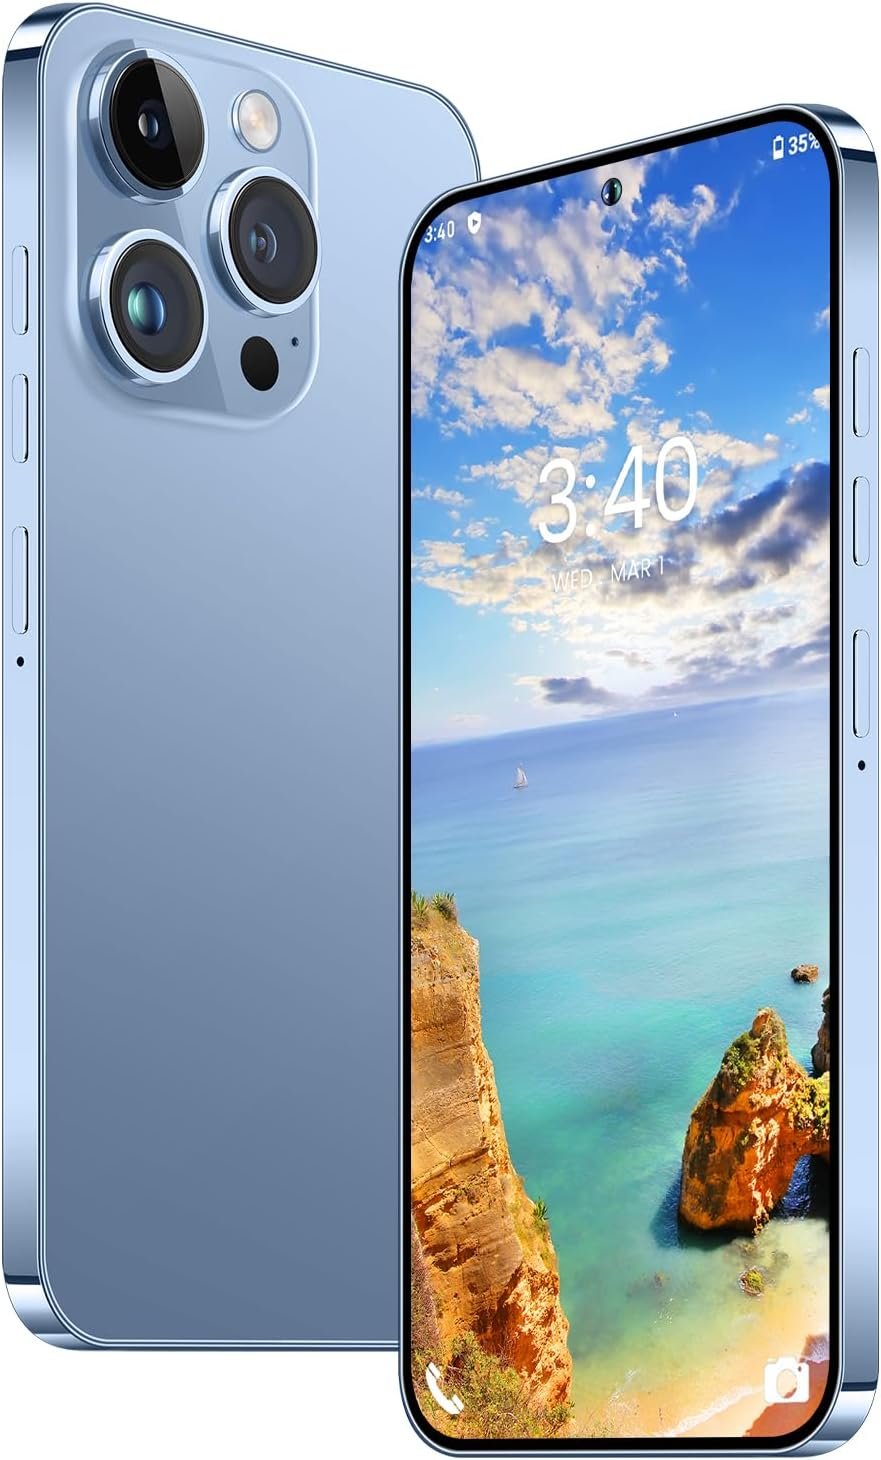 Mobile phone xixaomiro i14Pro Max Unlocked 5G Android Smartphone